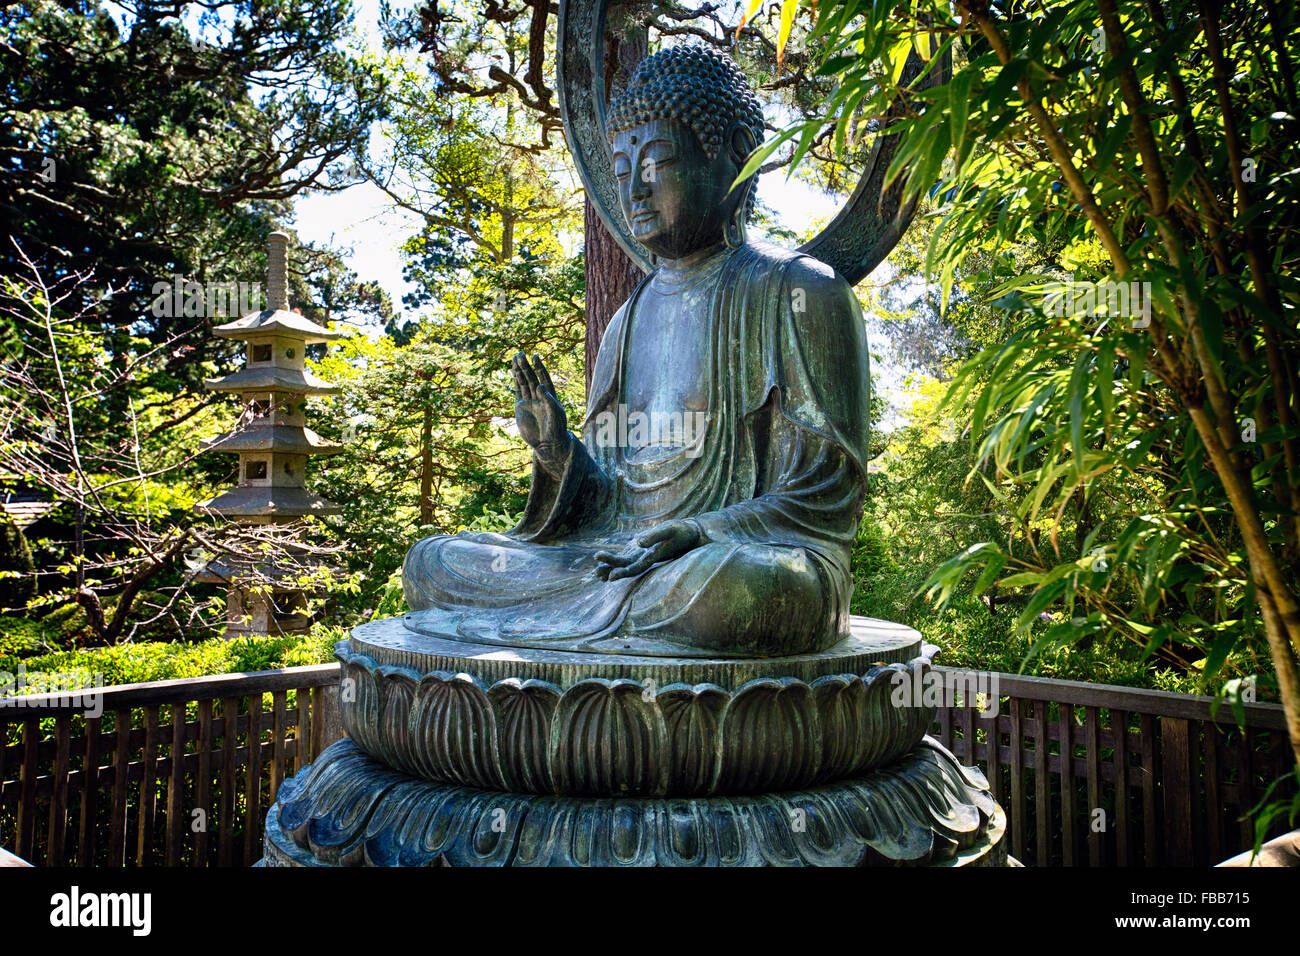 Low Angle View of a Sitting Bronze Buddha Statue, Japanese Tea Garden, San Francisco, California Stock Photo